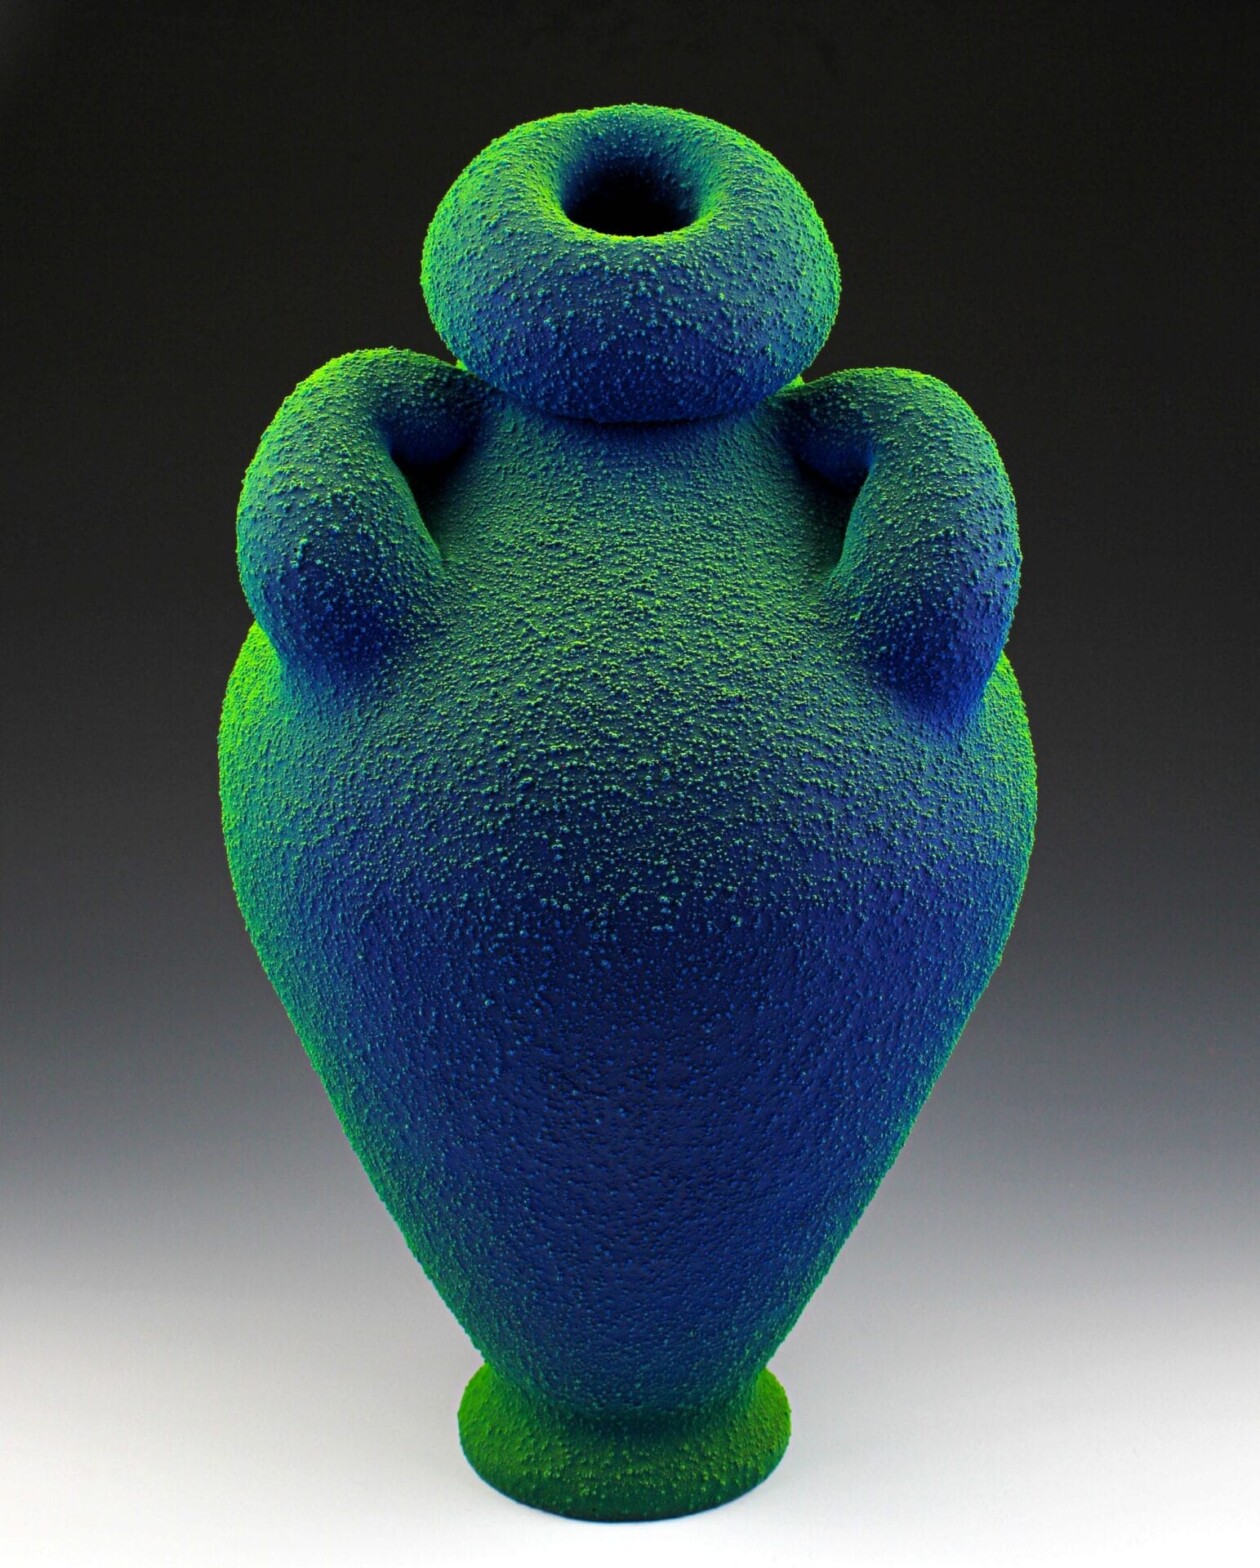 Glowing Sculptural Ceramic Vessels By Maxwell Mustardo (8)